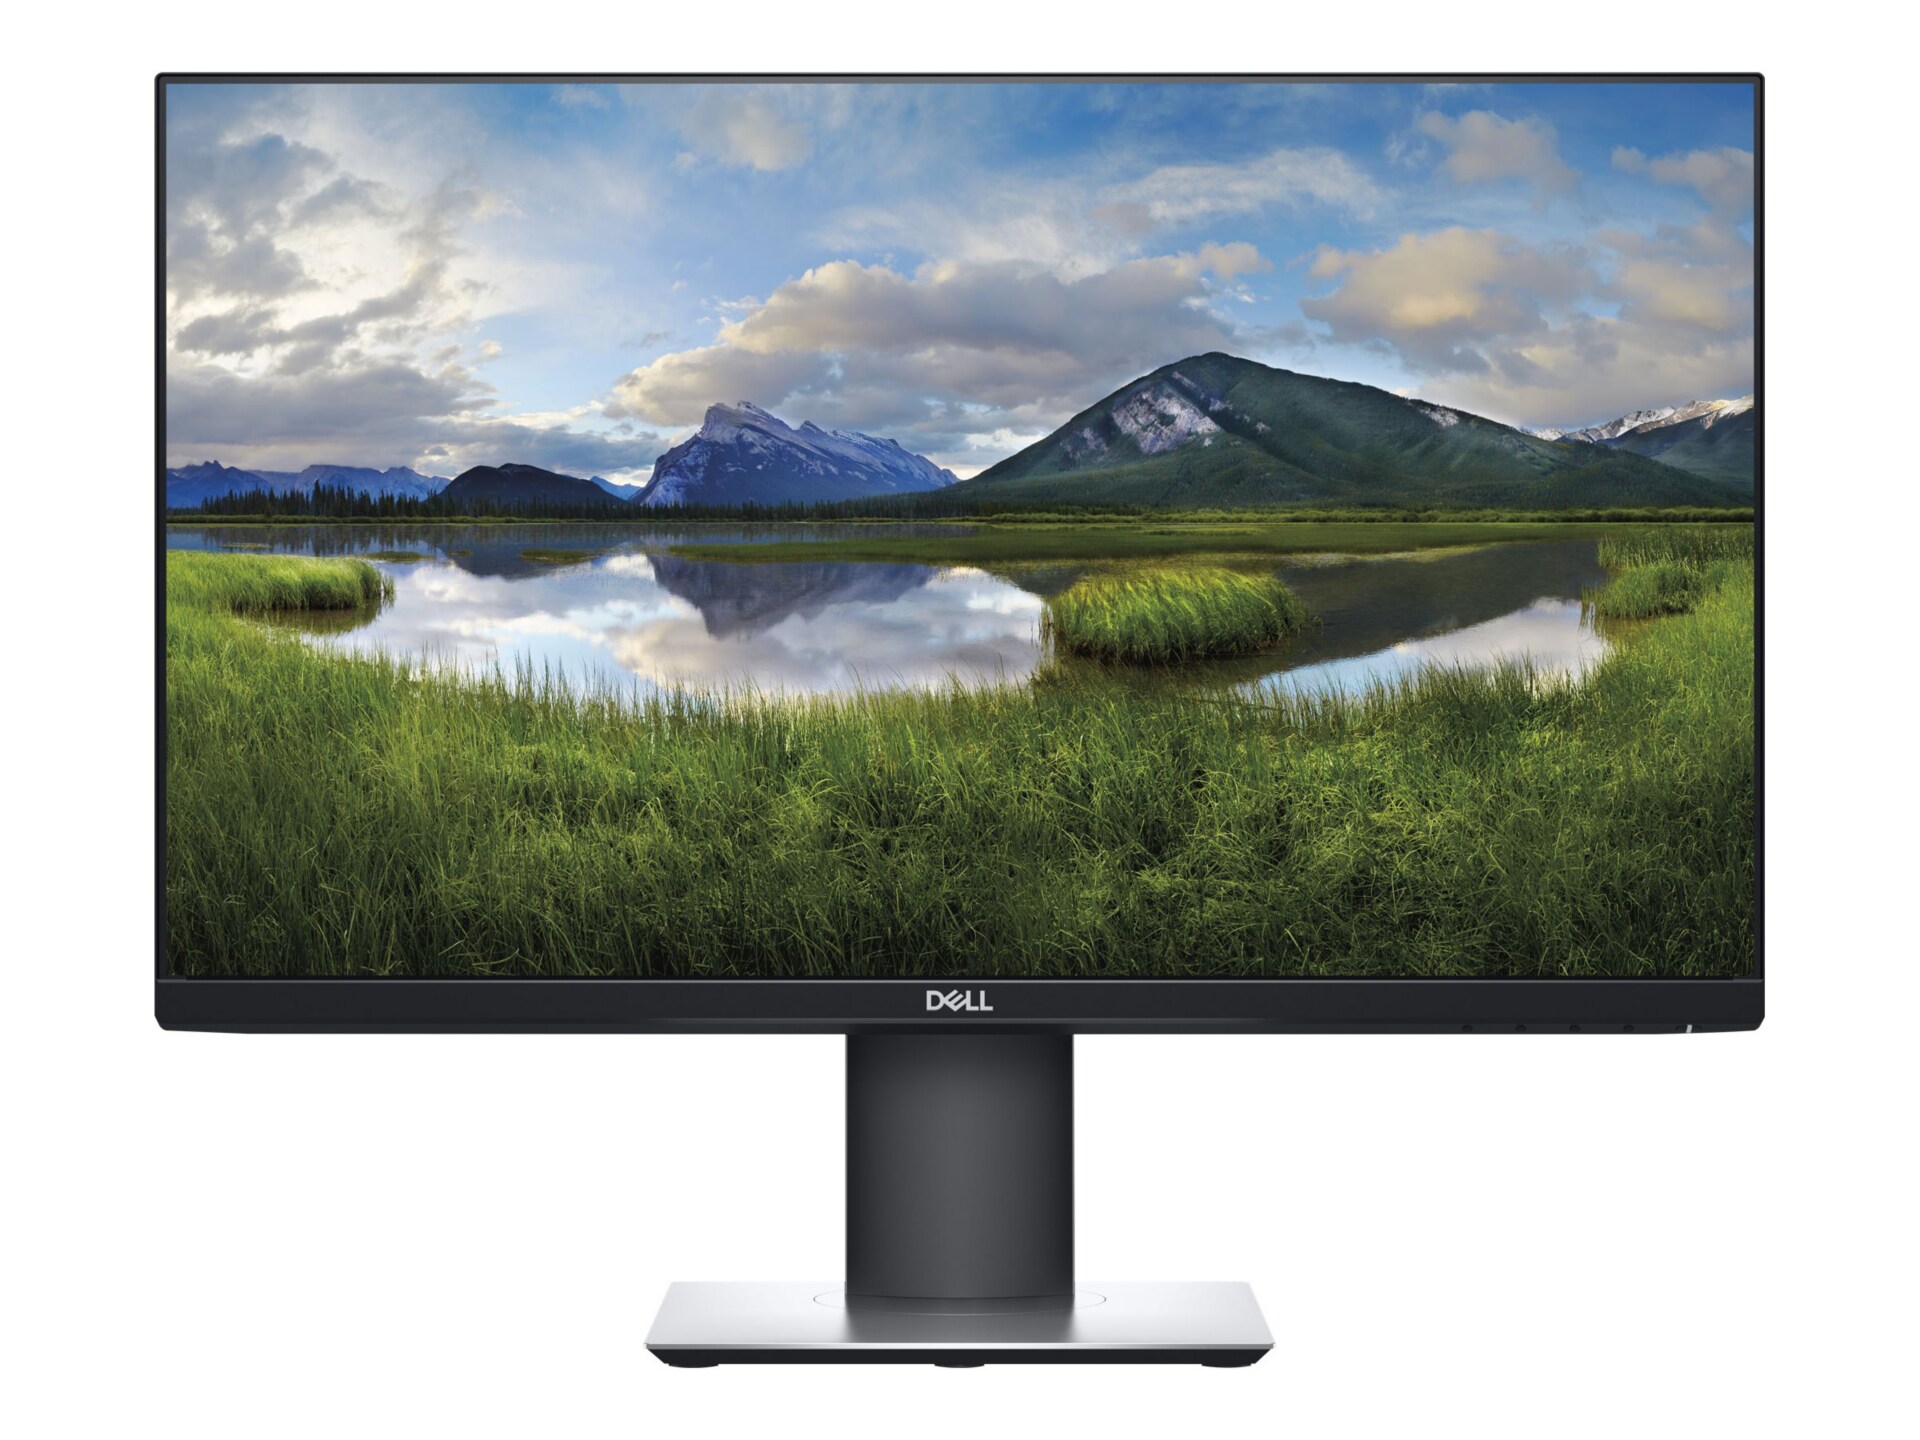 Dell P2419H - LED monitor - Full HD (1080p) - 24"